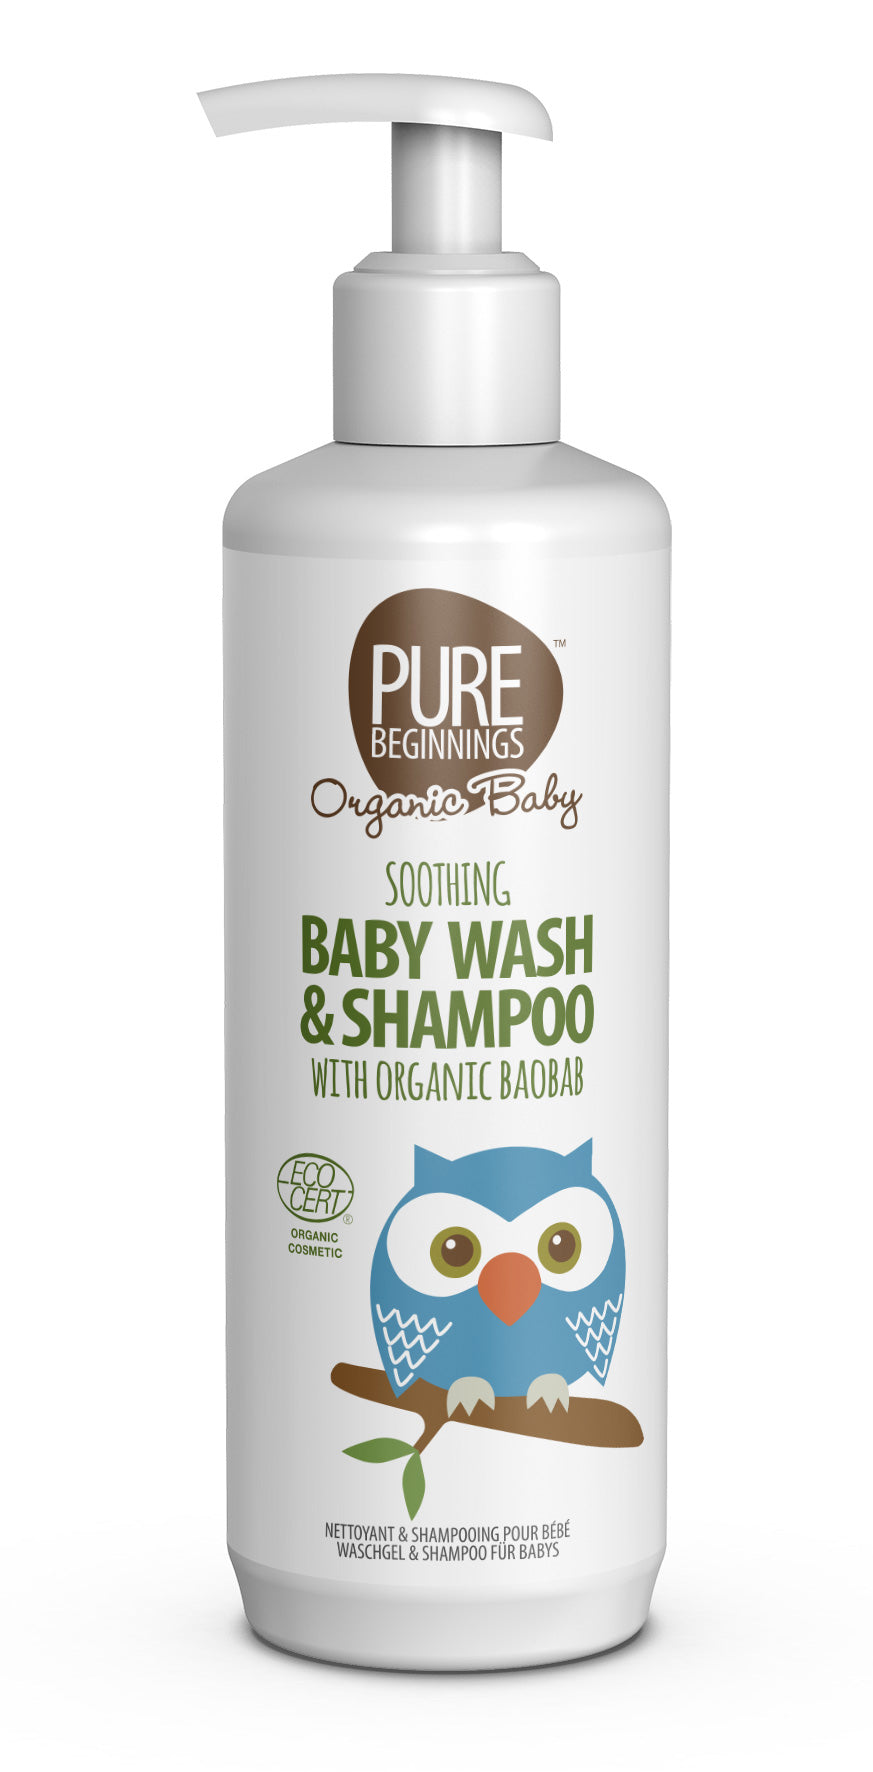 Soothing Baby Wash & Shampoo